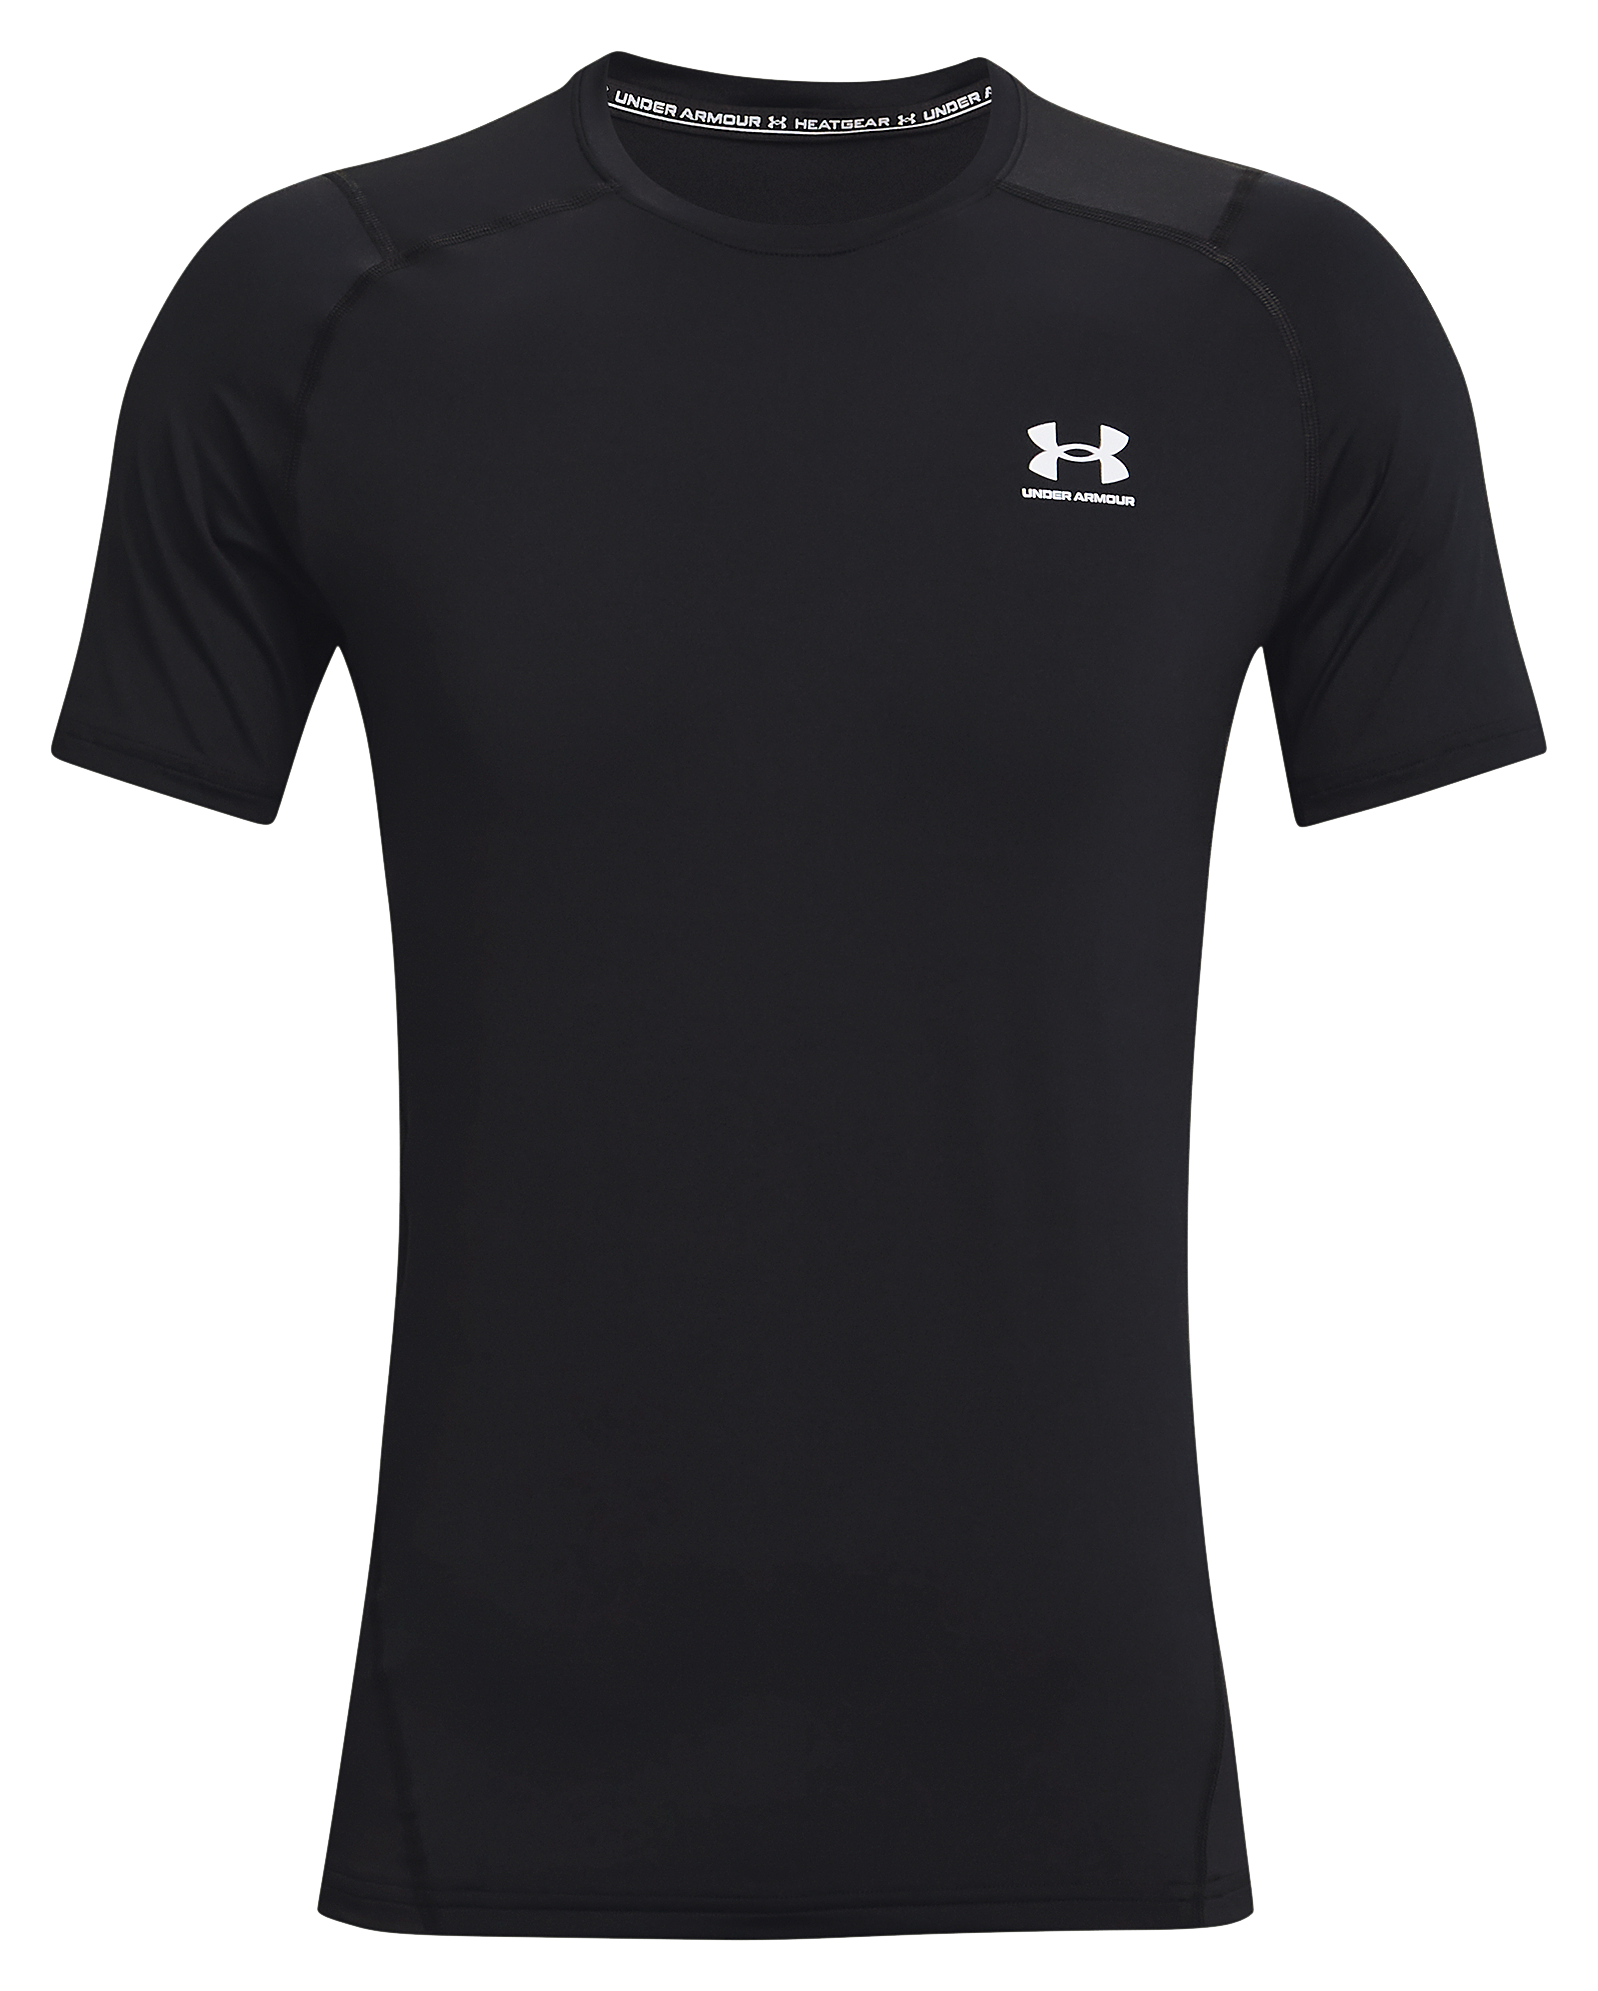 Under Armour HeatGear Fitted Short-Sleeve T-Shirt for Men - Black - LT